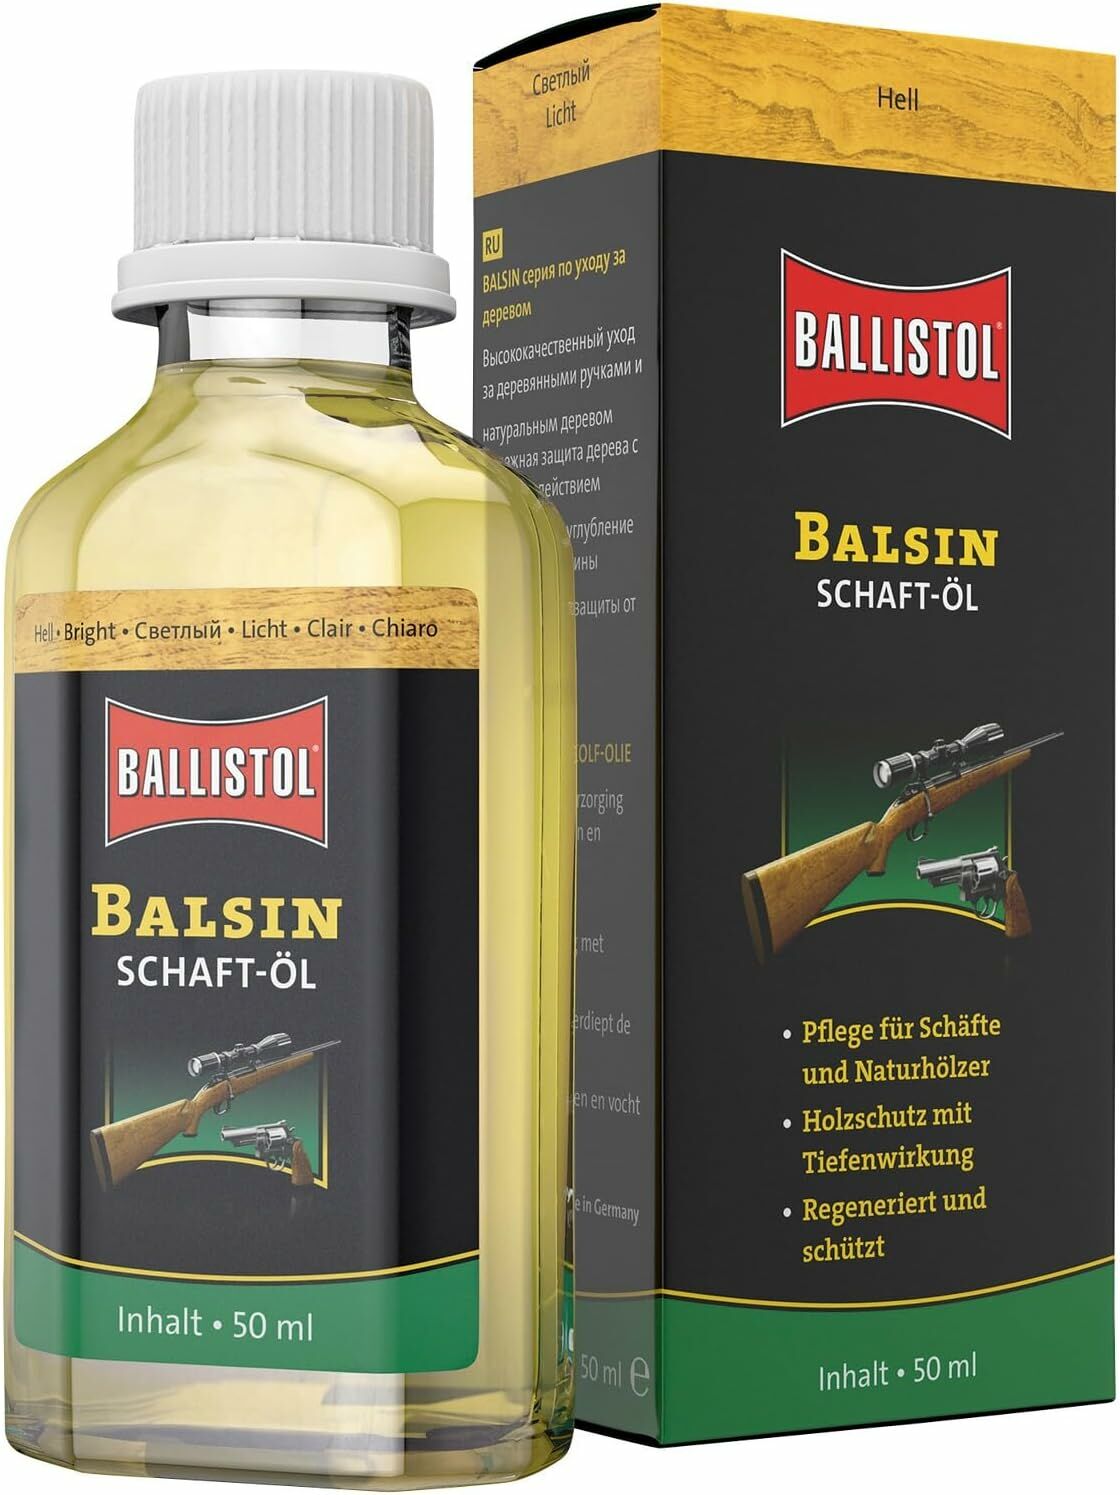 BALLISTOL BALSIN STOCKOIL BRIGHT 50 ML ŞAFTÖL KUNDAK YAĞI